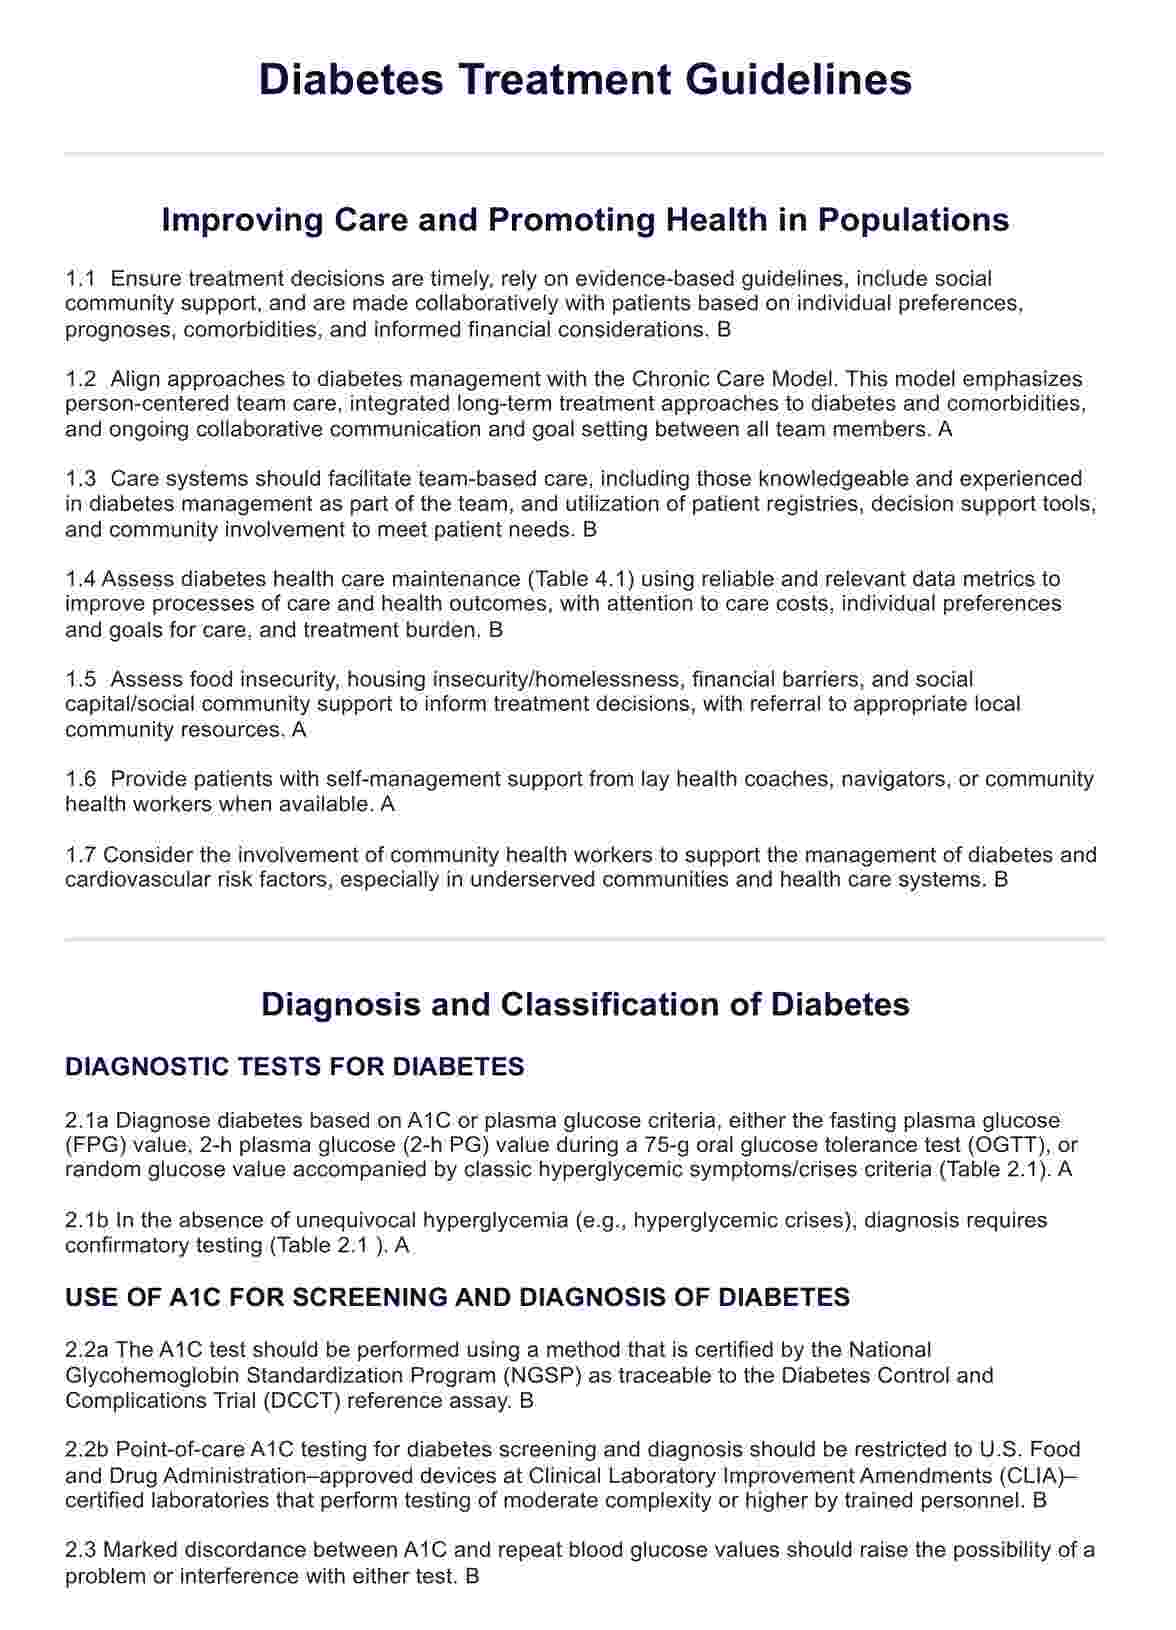 Diabetes Treatment Guidelines PDF Example